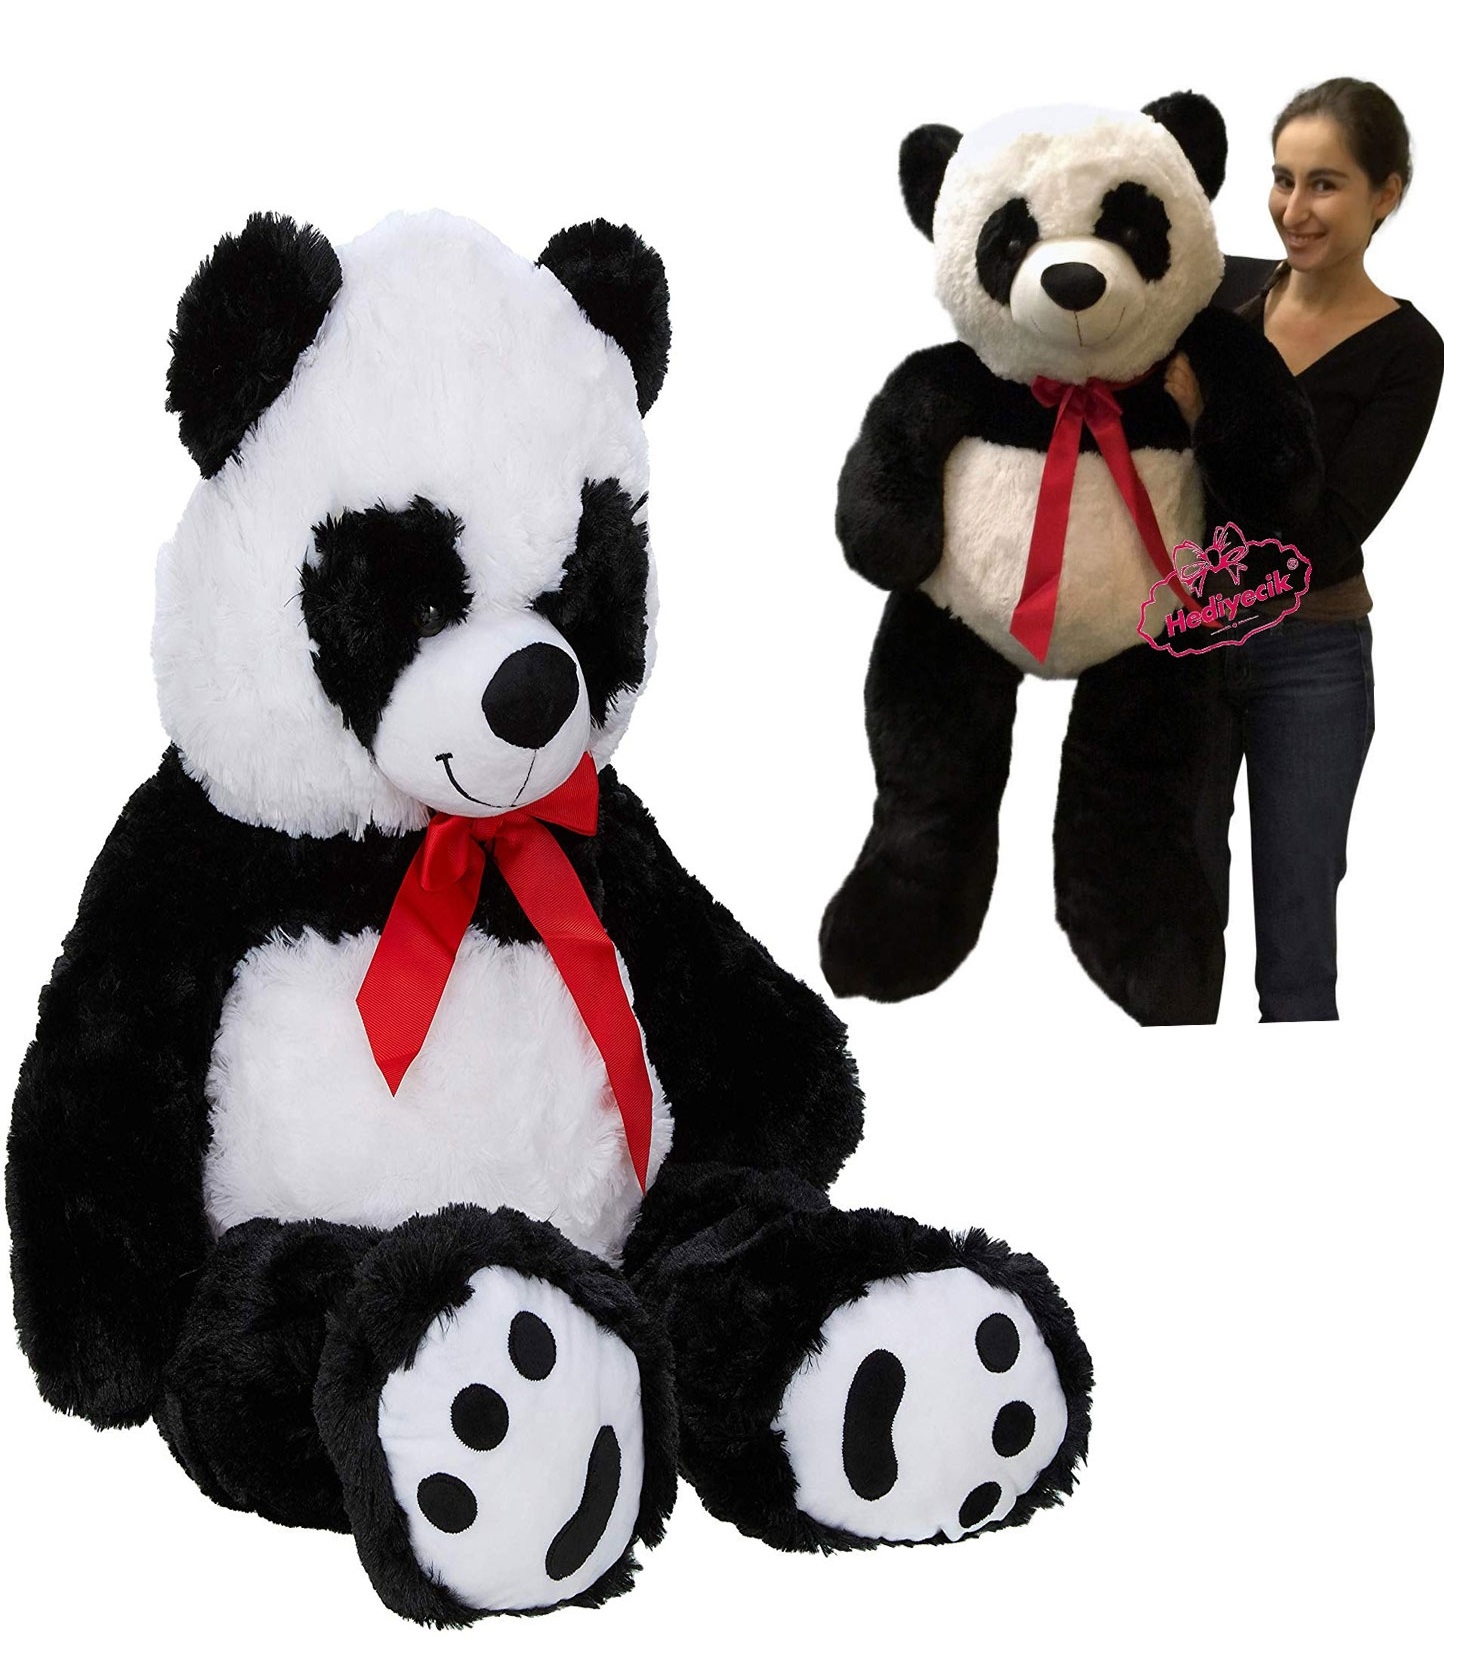 Pelus Oyuncak Panda 100 Cm 1 Metre Buyuk Boy Salas Tam Sarilmalik Fiyatlari Hediyecik Com Da